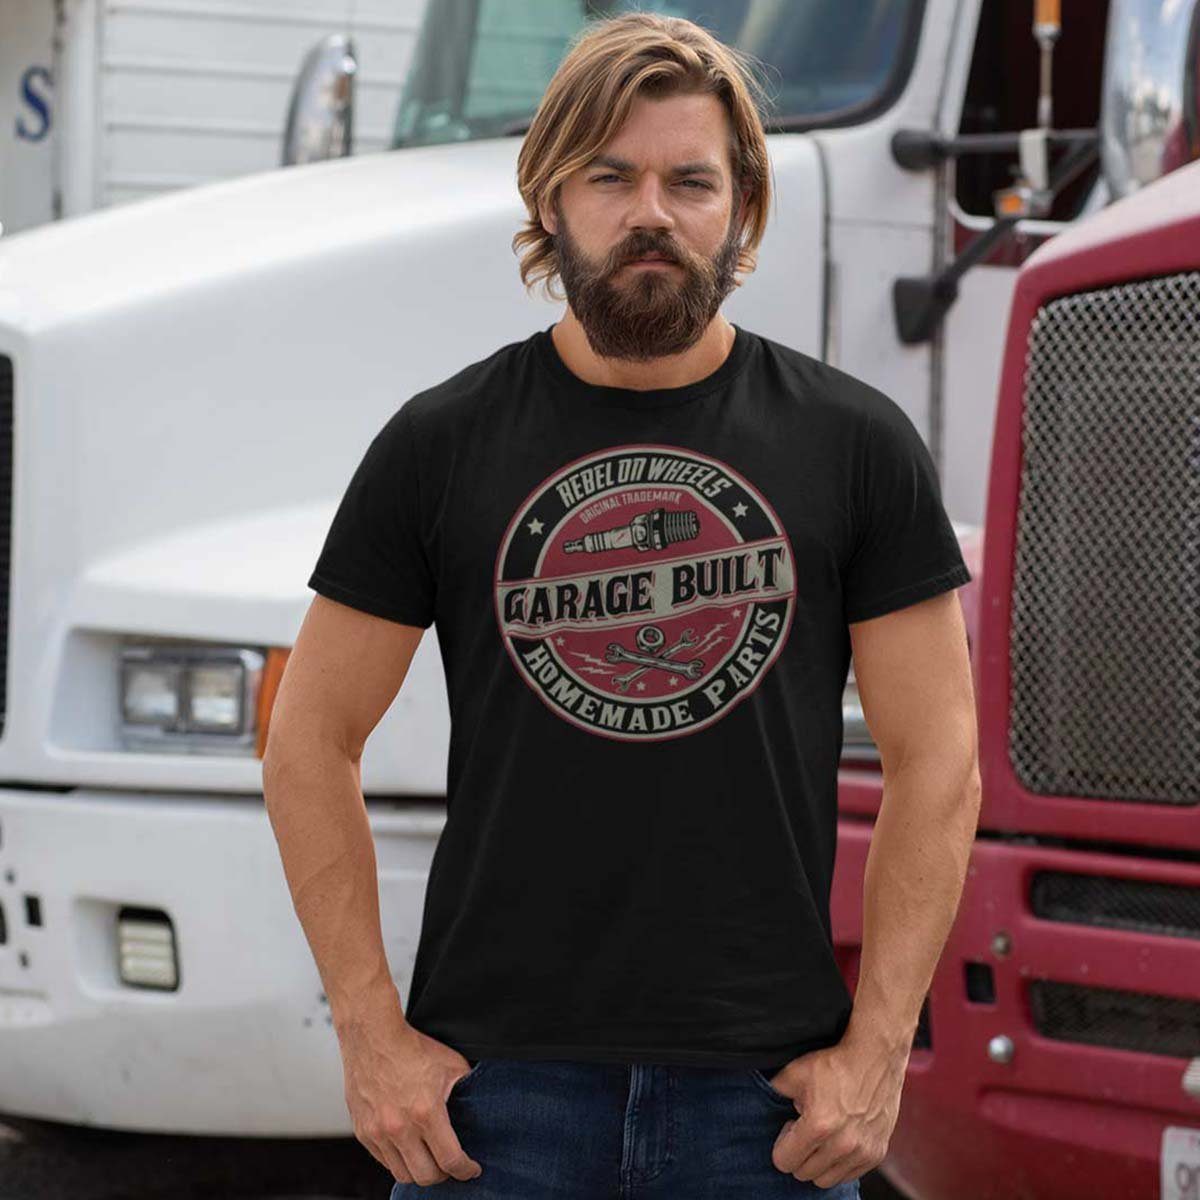 Tee Garage Herren Wheels mit T-Shirt US-Car Braun Auto T-Shirt / Motiv Built On Rebel